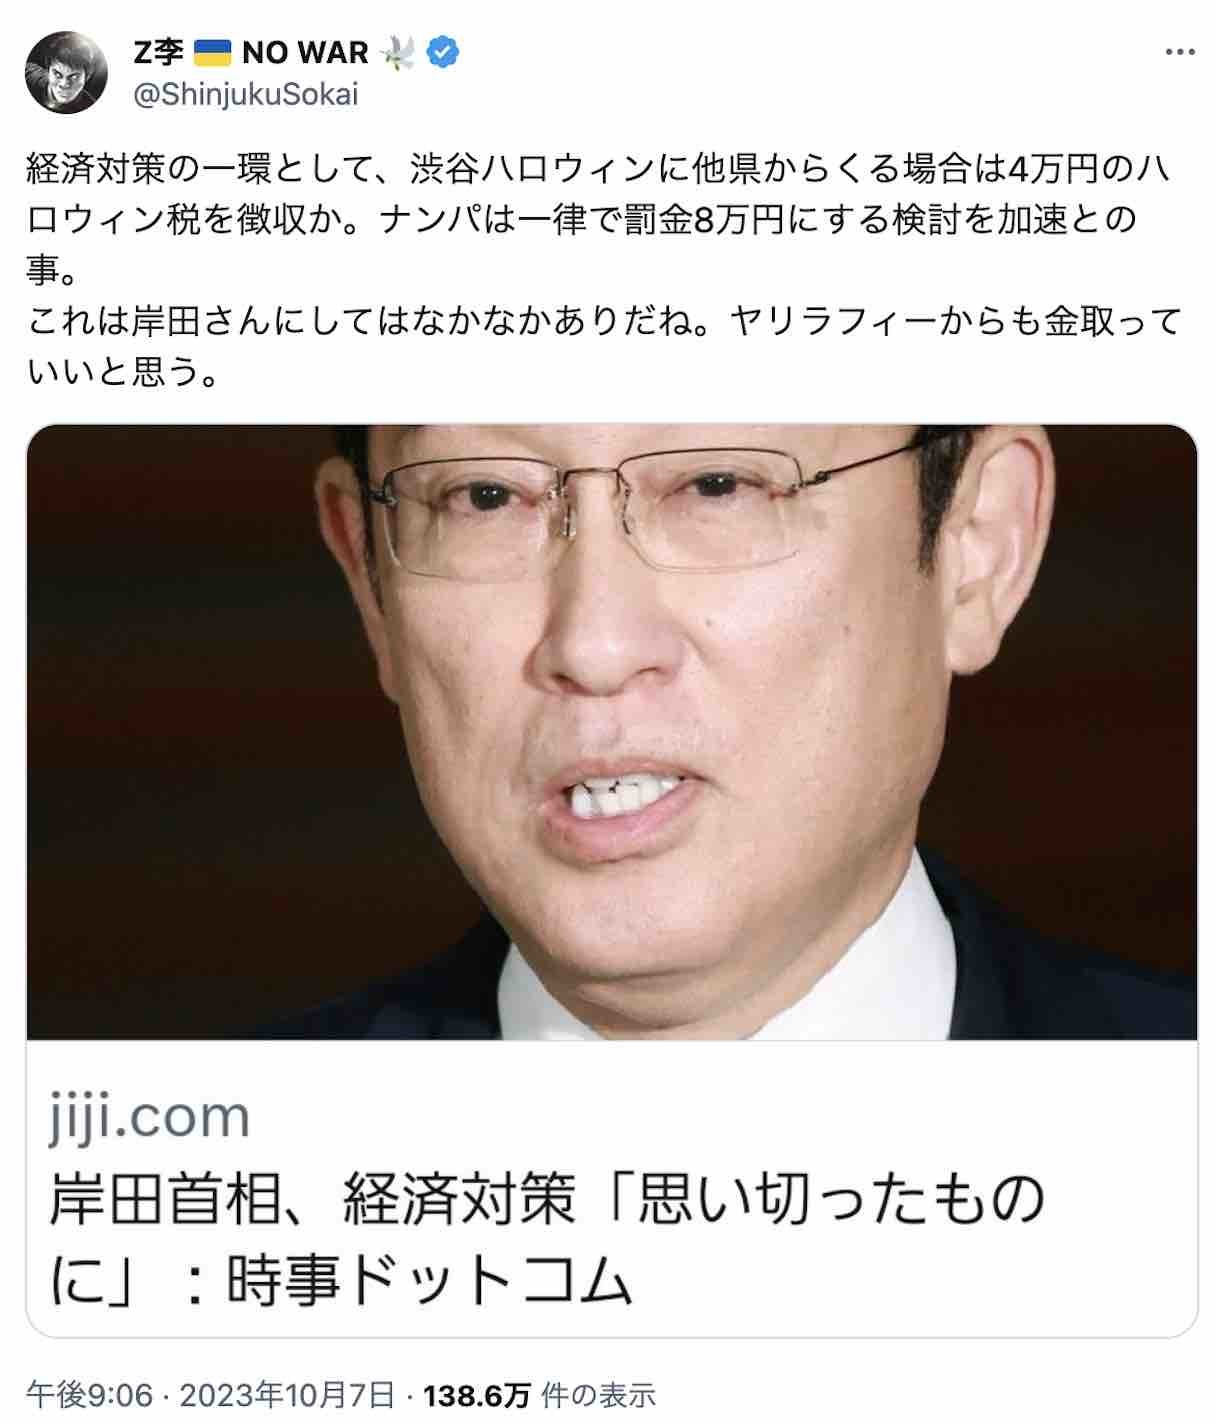 Ｚ李氏、岸田首相に異次元の経済政策提案「渋谷に他県からくるならハロウィン税徴収」